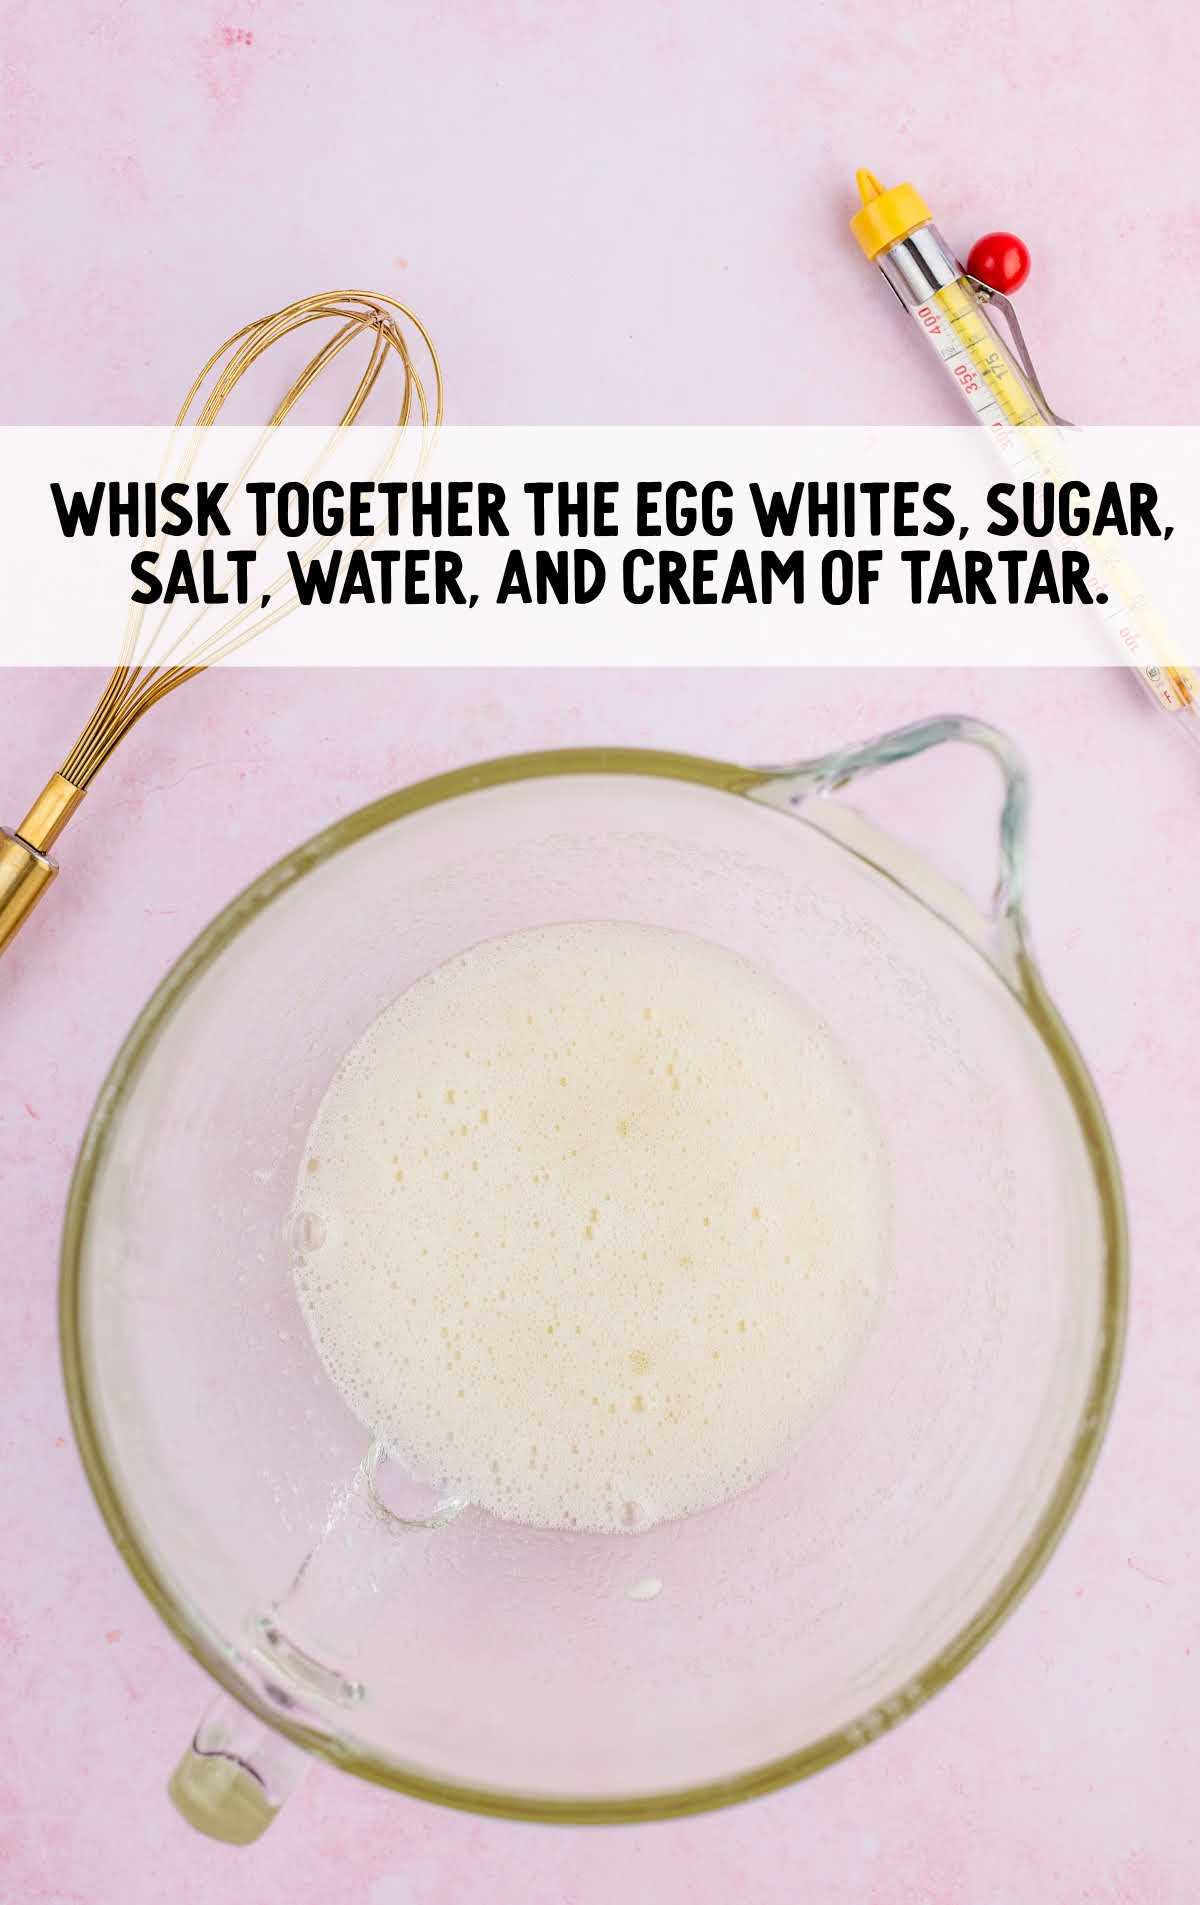 egg whites, sugar, salt, water, cream of tartar whisked